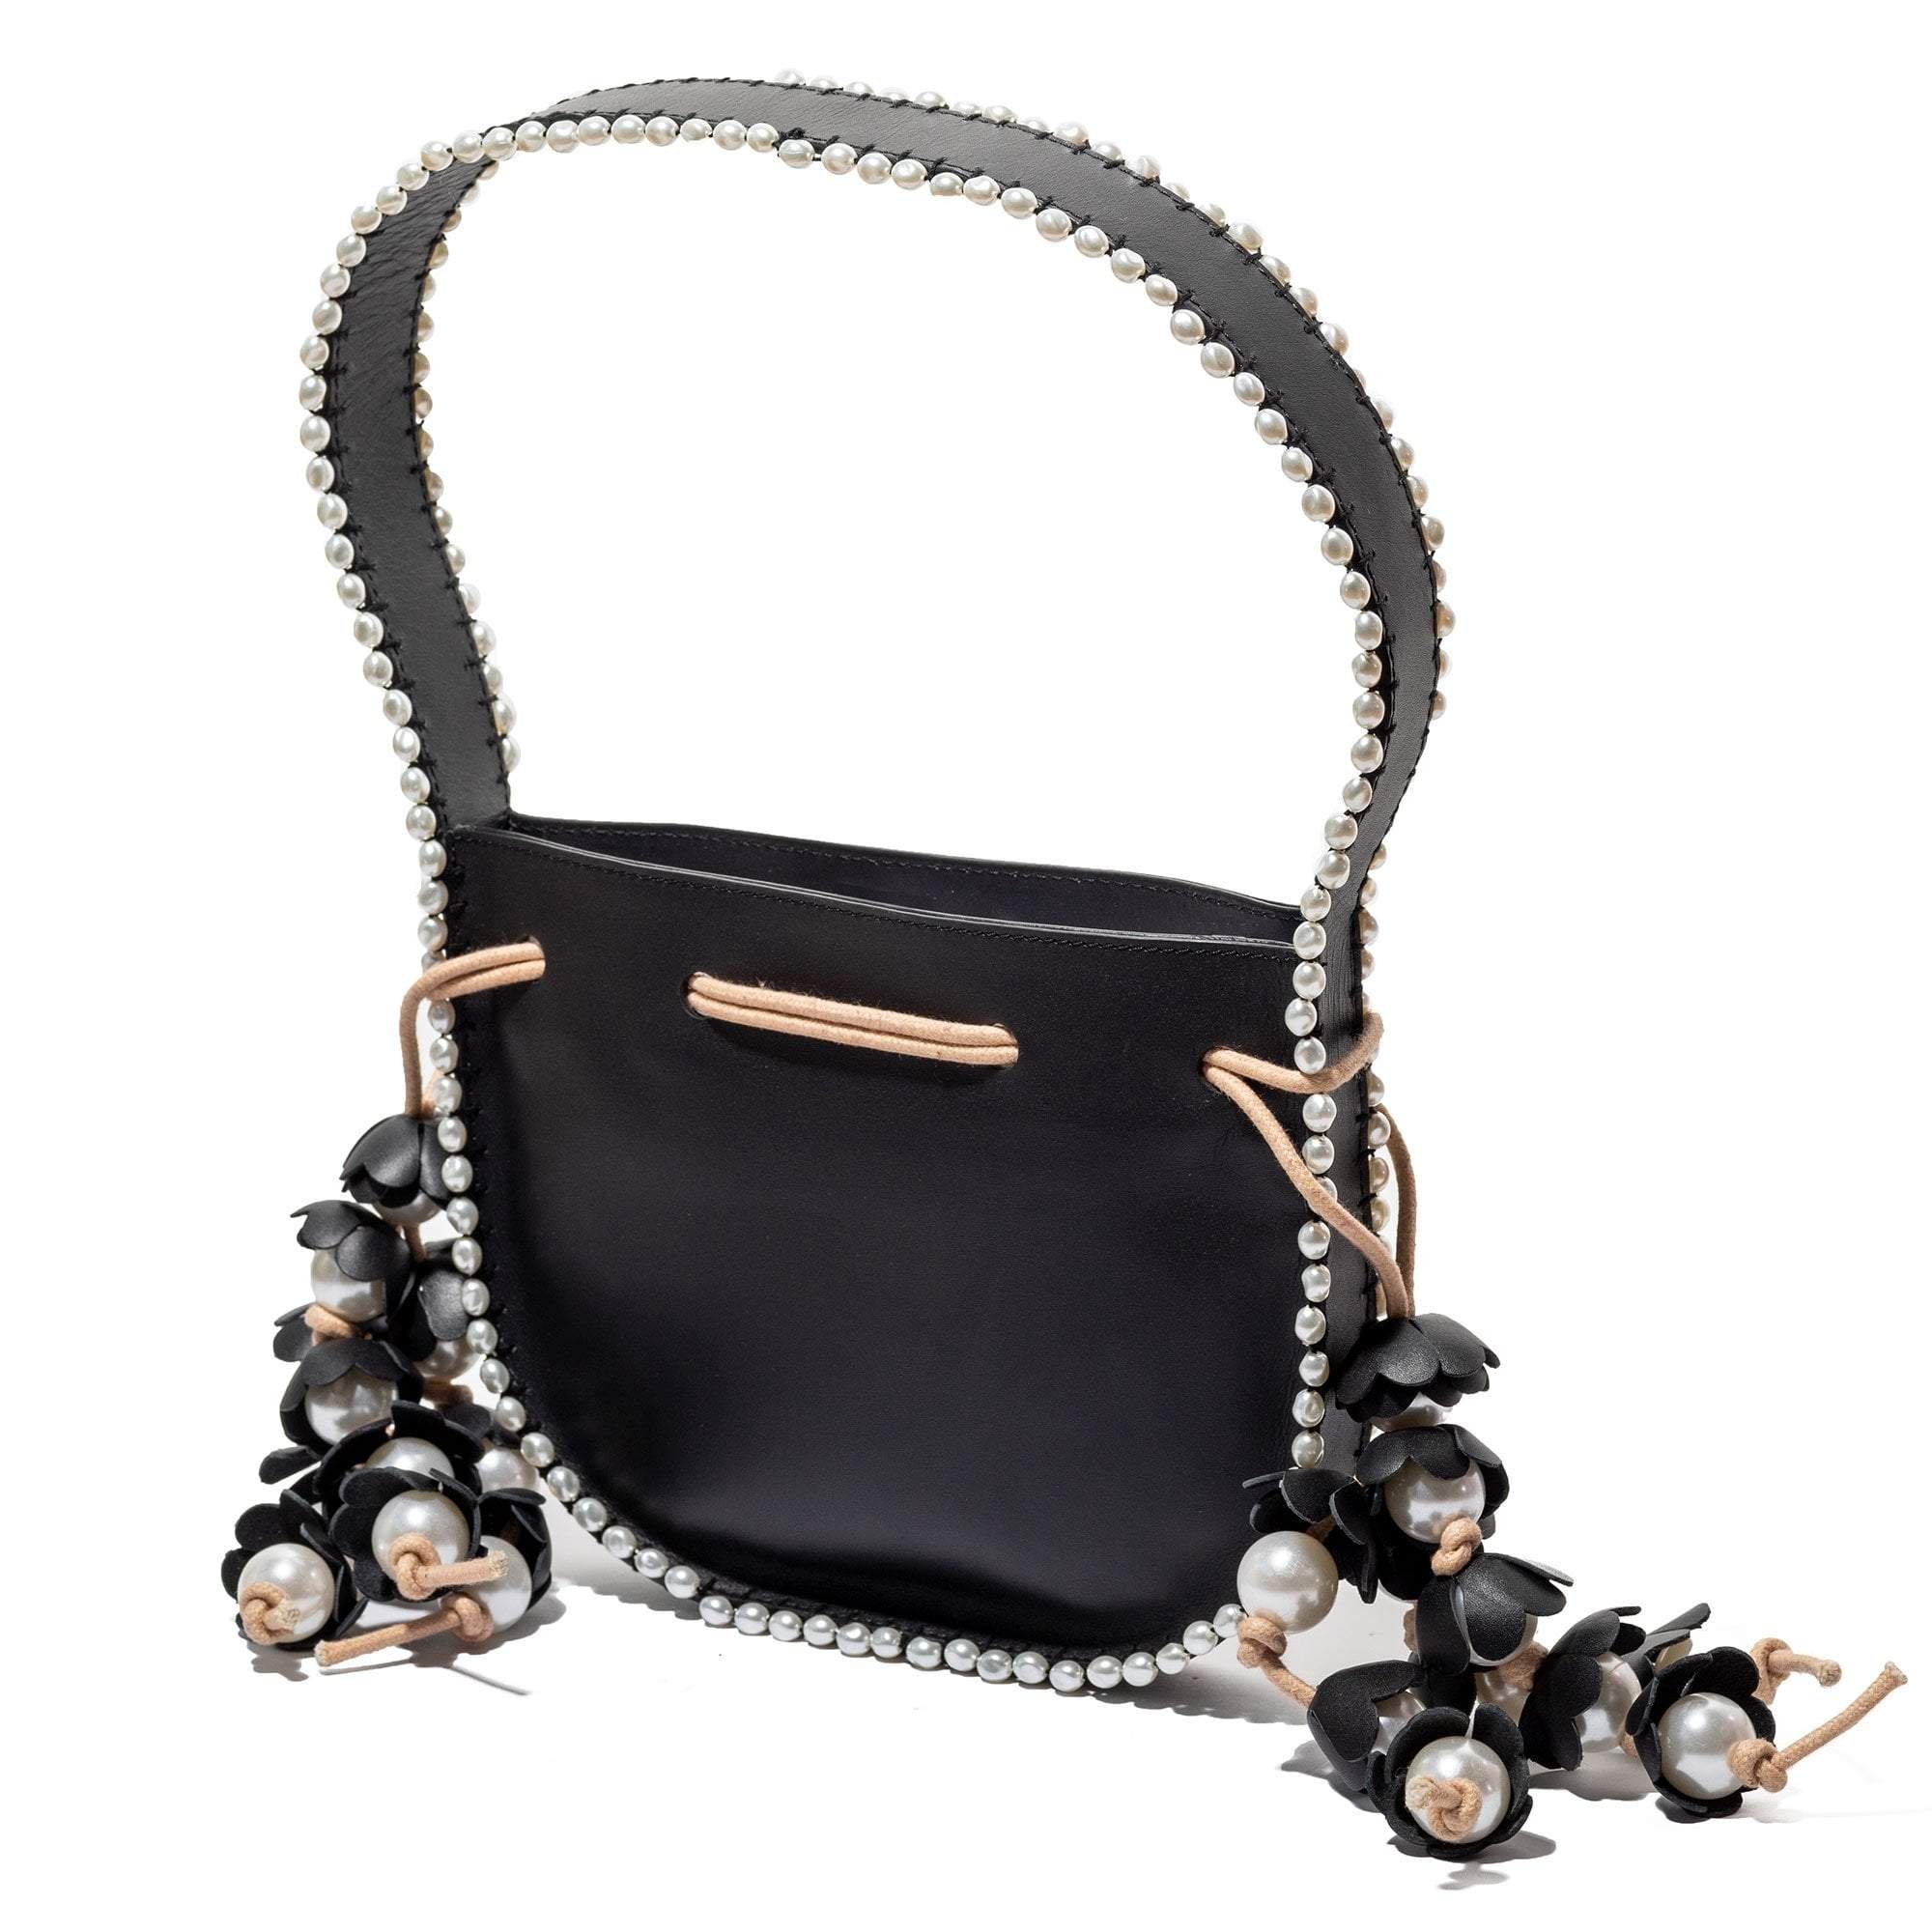 Lele Sadoughi “Ivy” bag, $345 at Lele Sadoughi